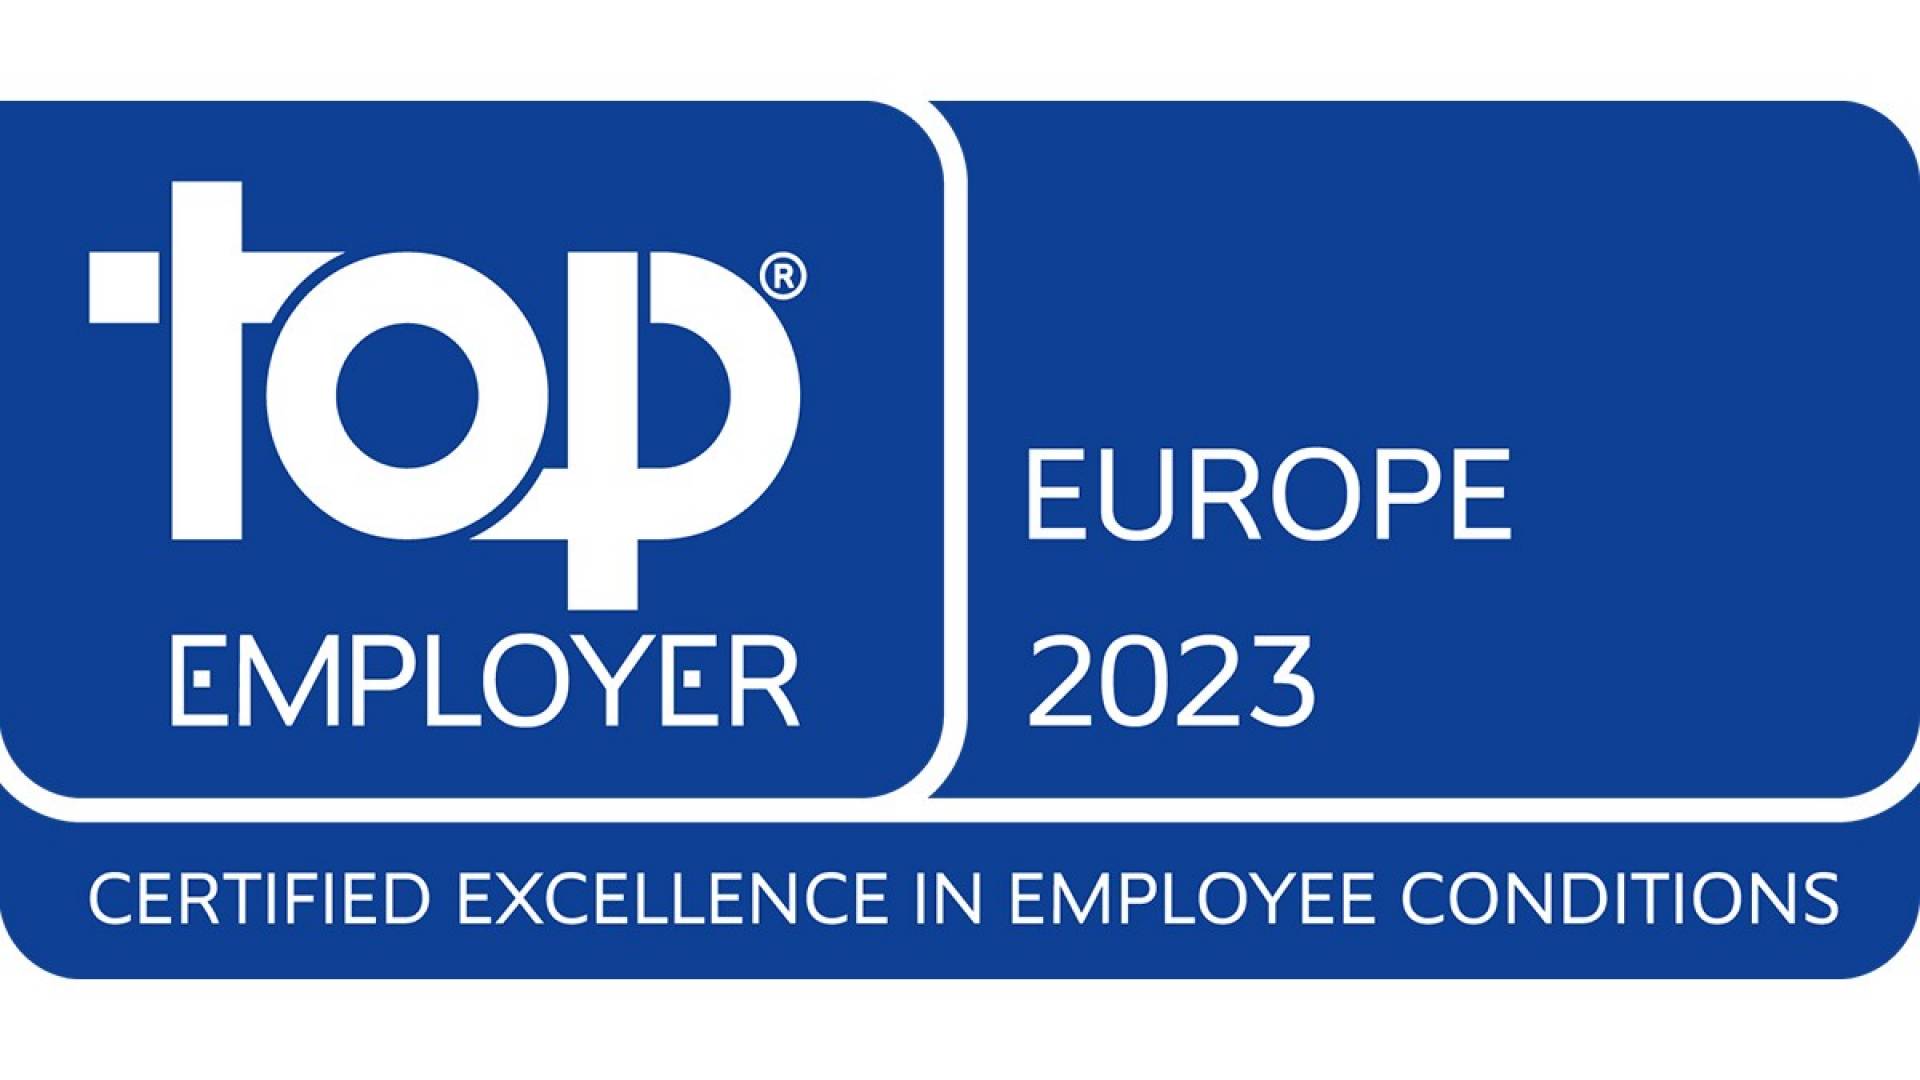 Top Employer 2023